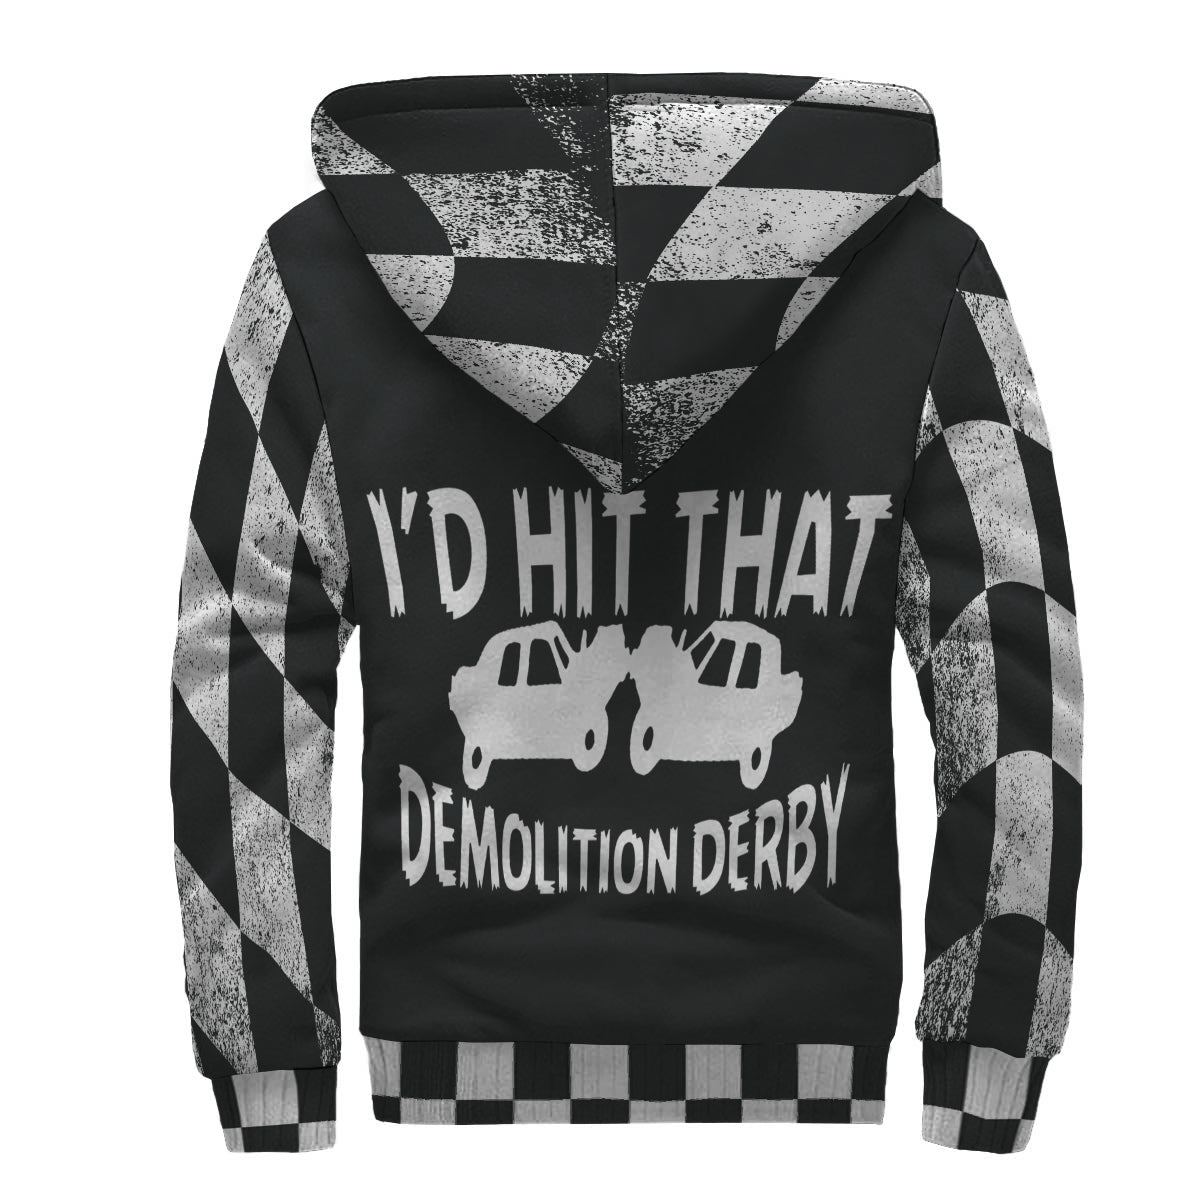 Demolition Derby Jacket